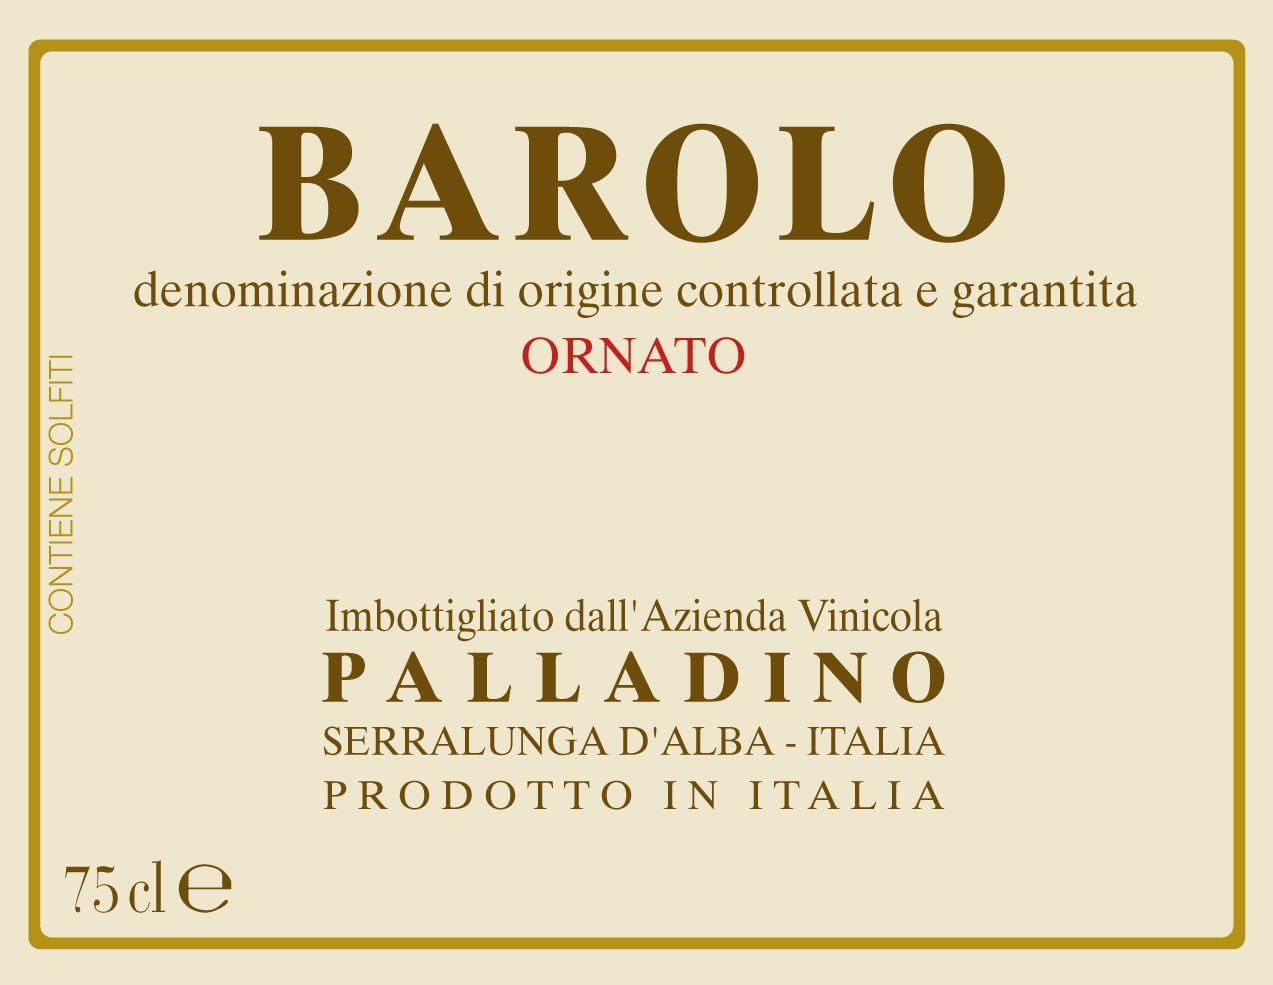 Palladino Barolo Ornato 2011 - only 1 bottle left!